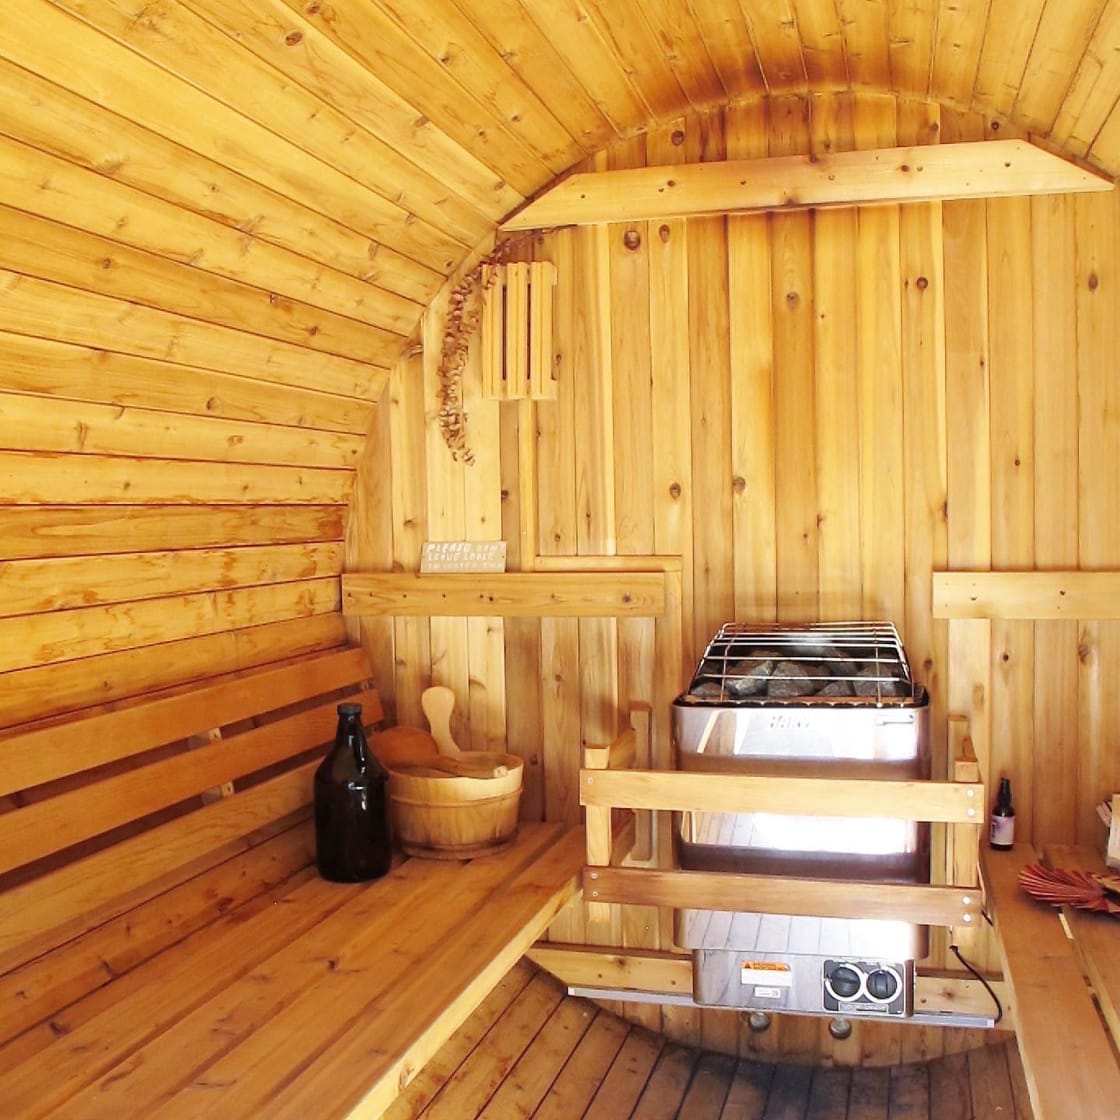 8 foot dry barrel sauna. (slowly add water to rocks for steam!)